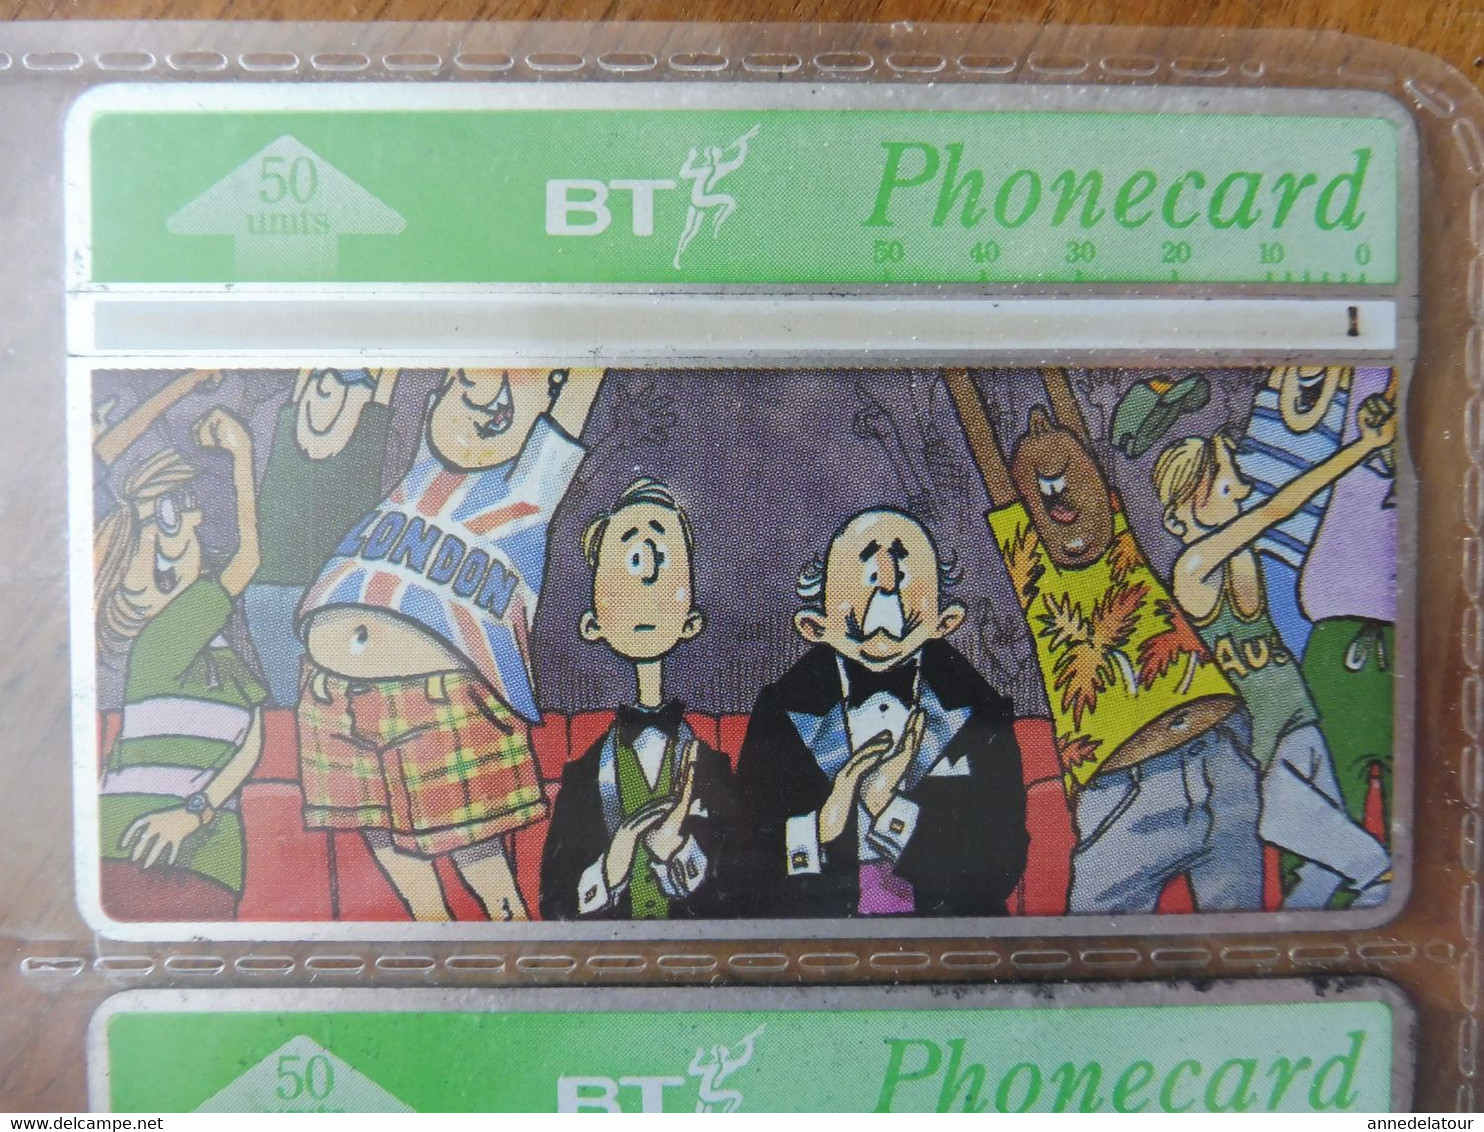 10  Phonecard    BT  (British Telecom)  ---> Radio Times,  and so and   ( origine Royaume Uni ) (United Kingdom )